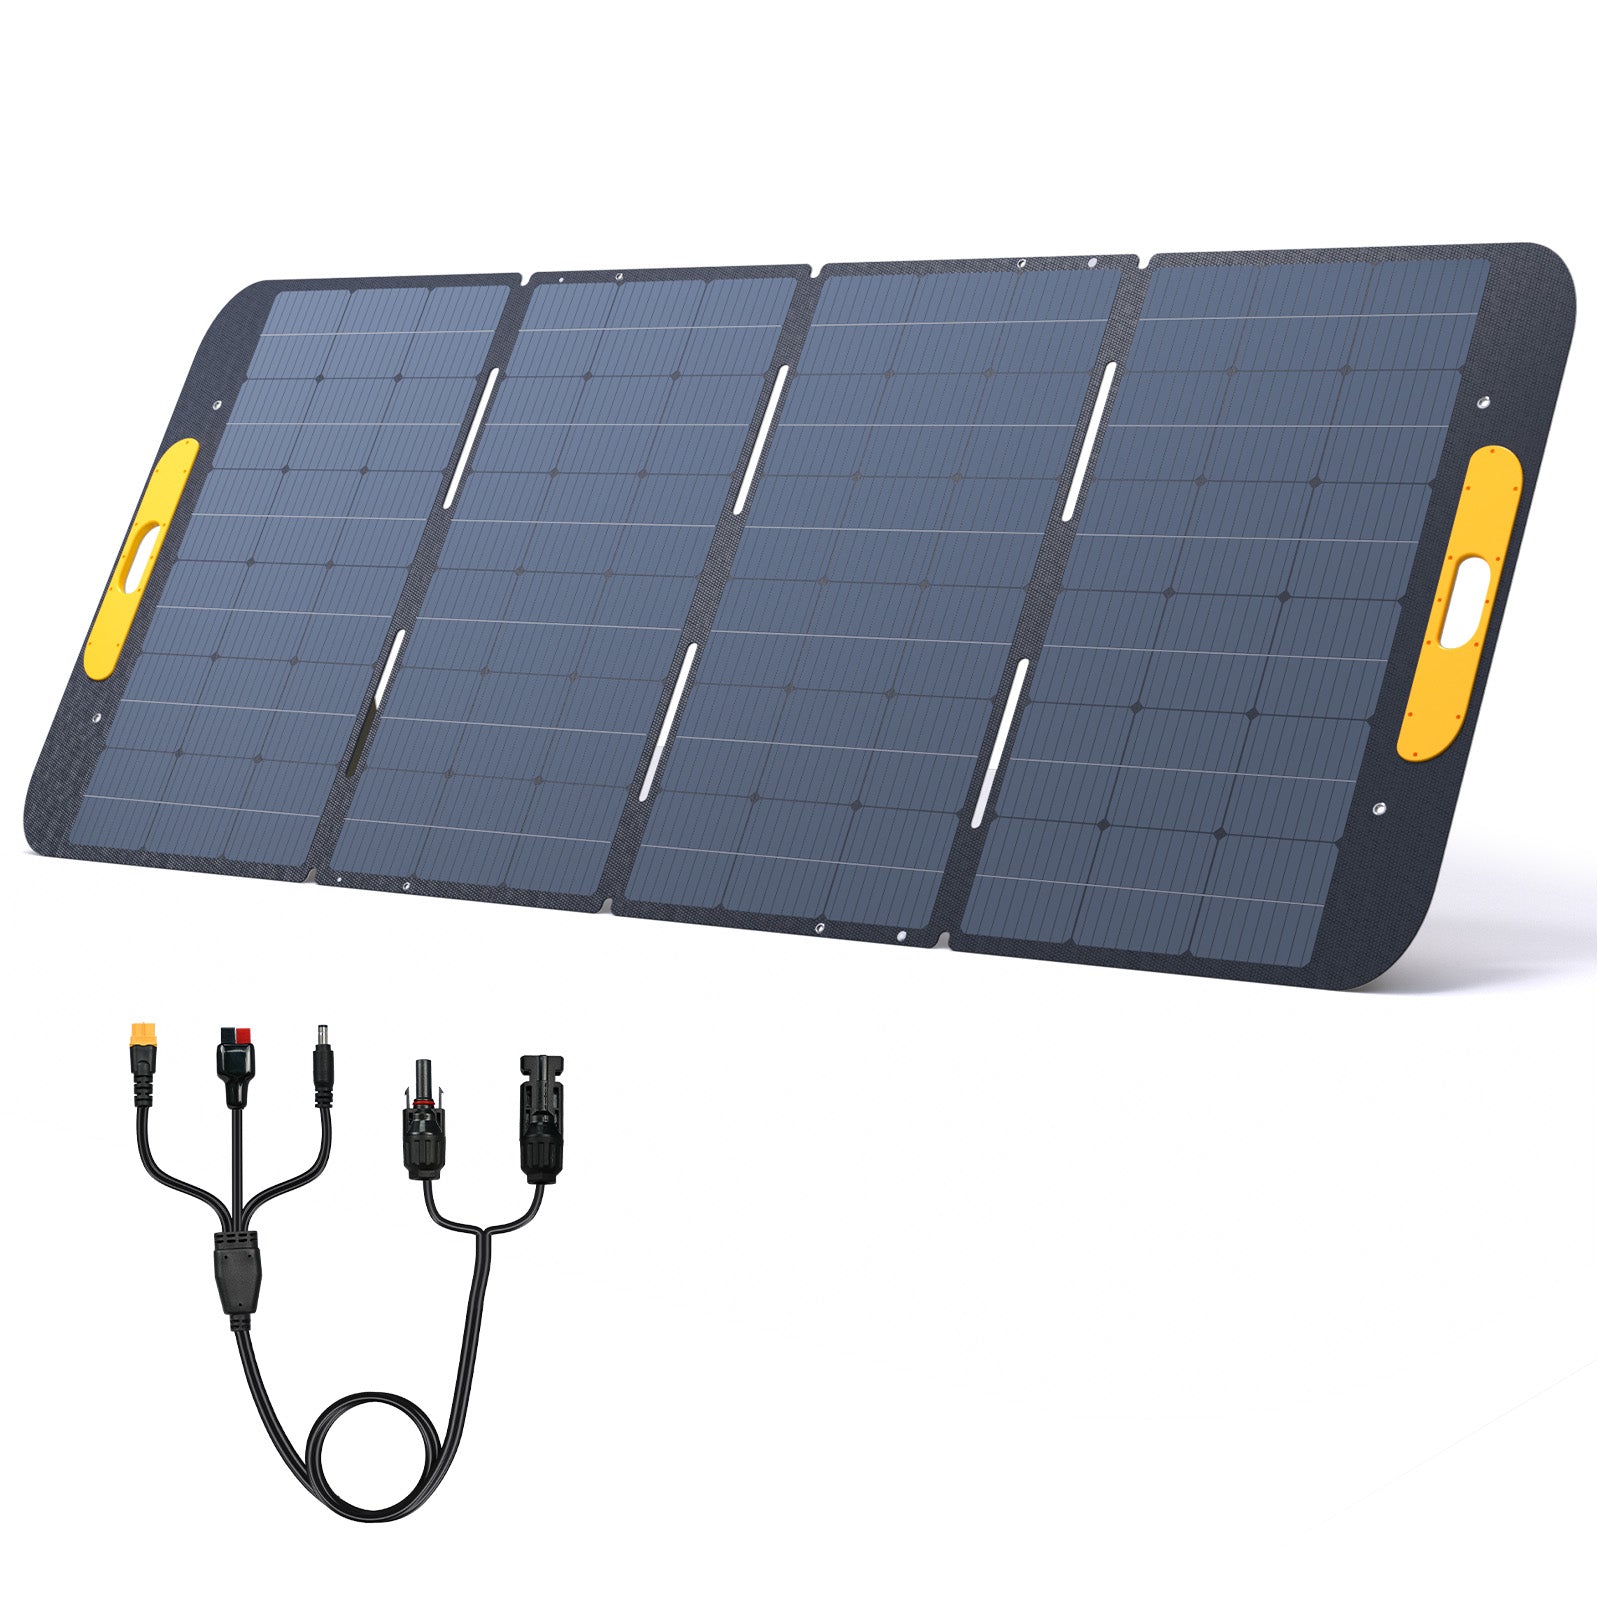 VTOMAN VS400 Pro Portable Solar Panel 400W 40V